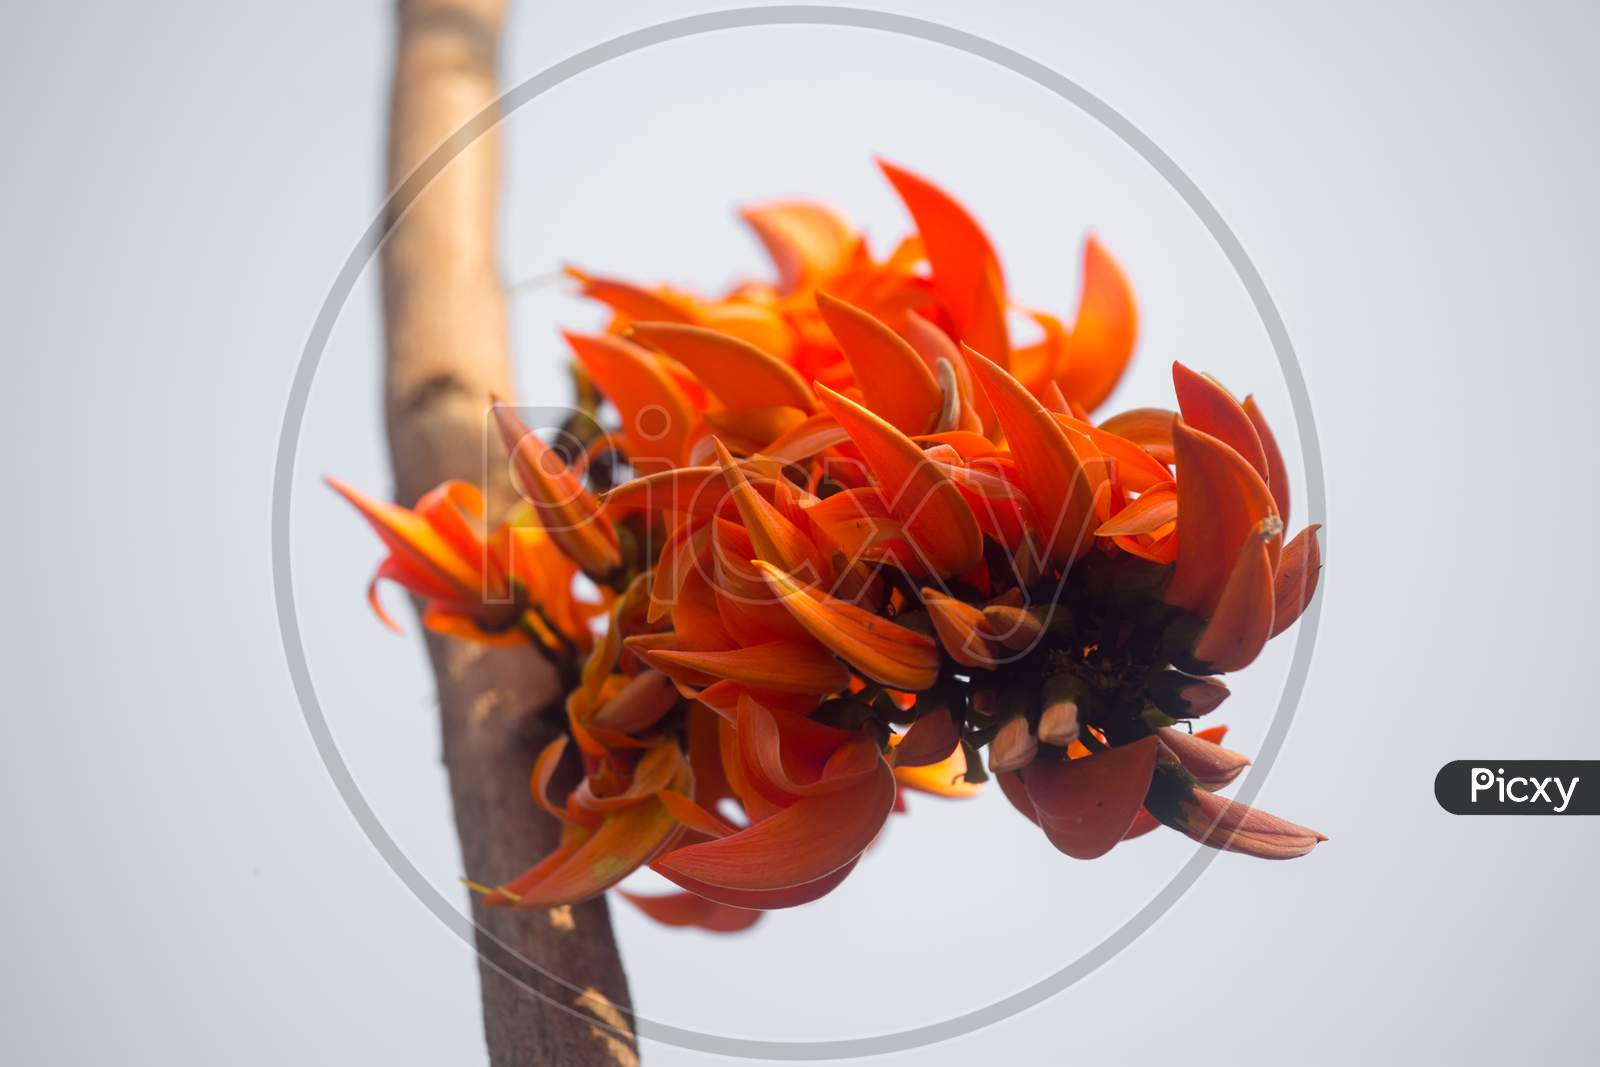 The Beautiful Reddish-Orange Butea Monosperma Flower Petals Closeup Views.